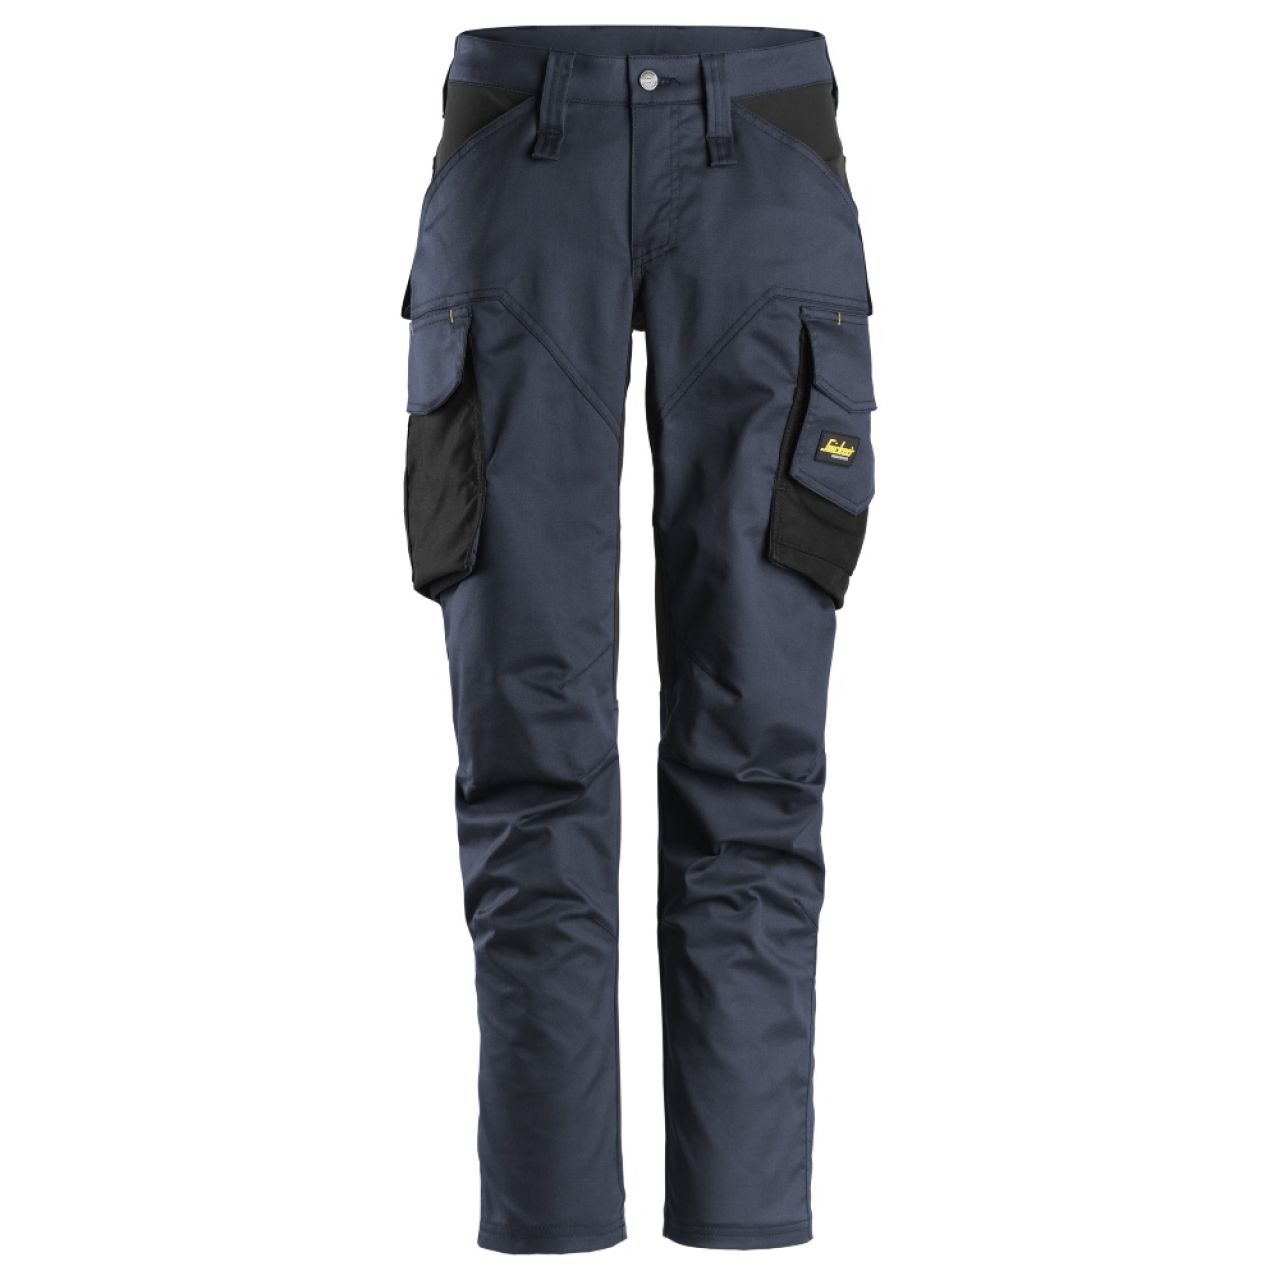 6703 Pantalones largos de trabajo elásticos para mujer con bolsillos para rodilleras AllroundWork azul marino-negro talla 88